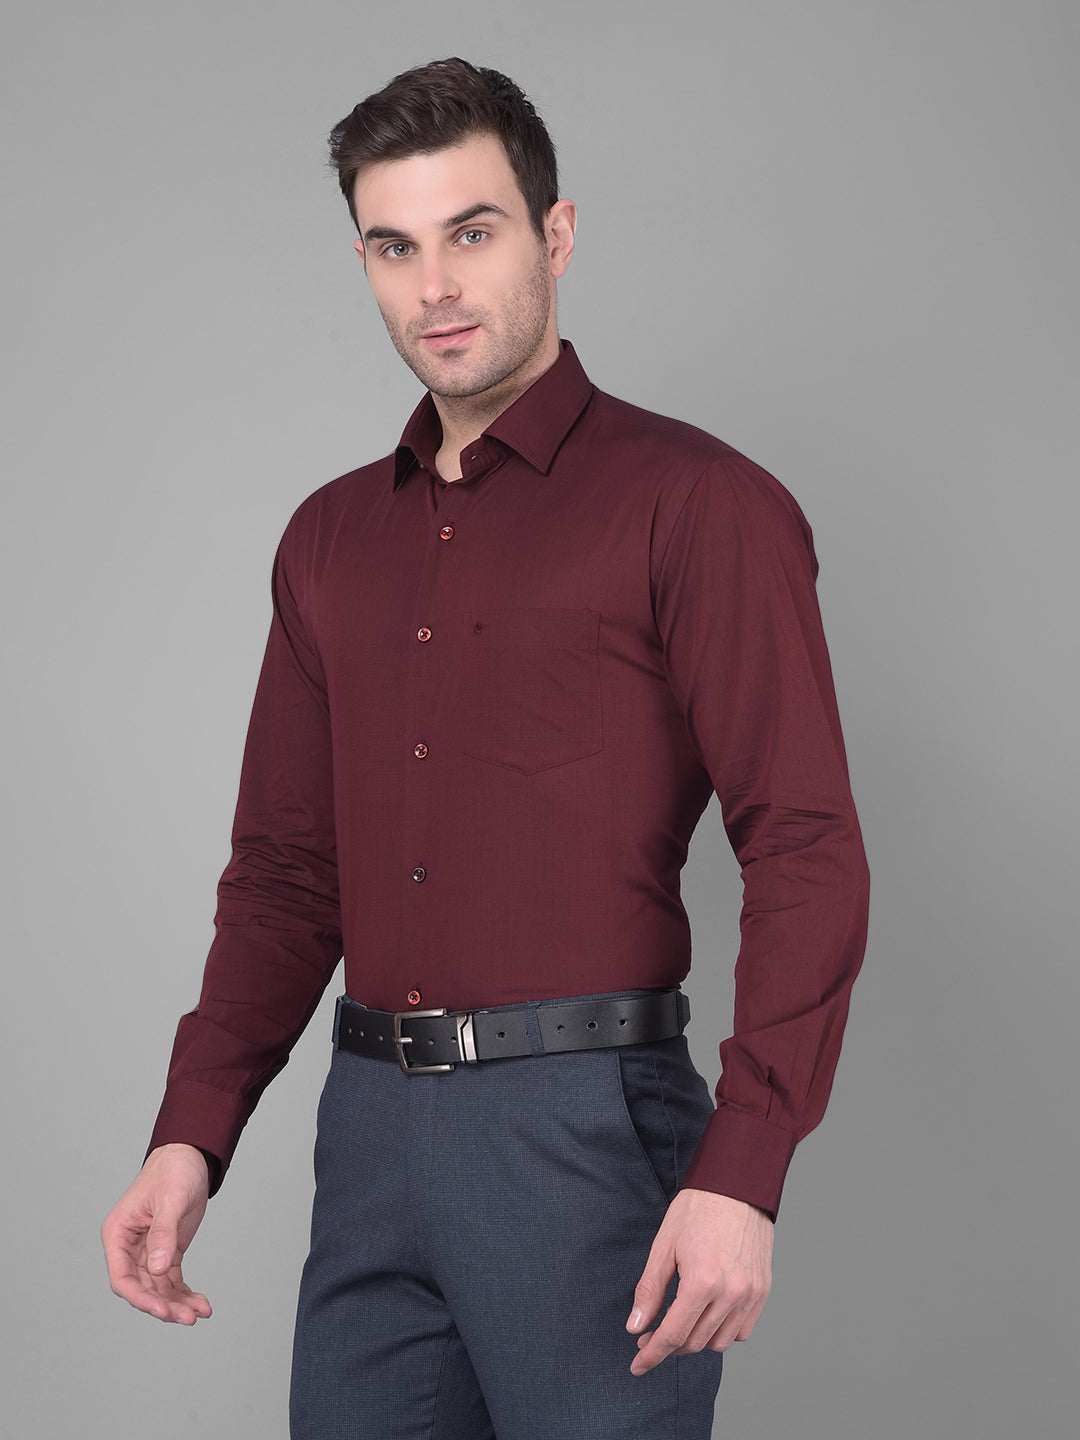 cobb solid wine smart fit formal shirt